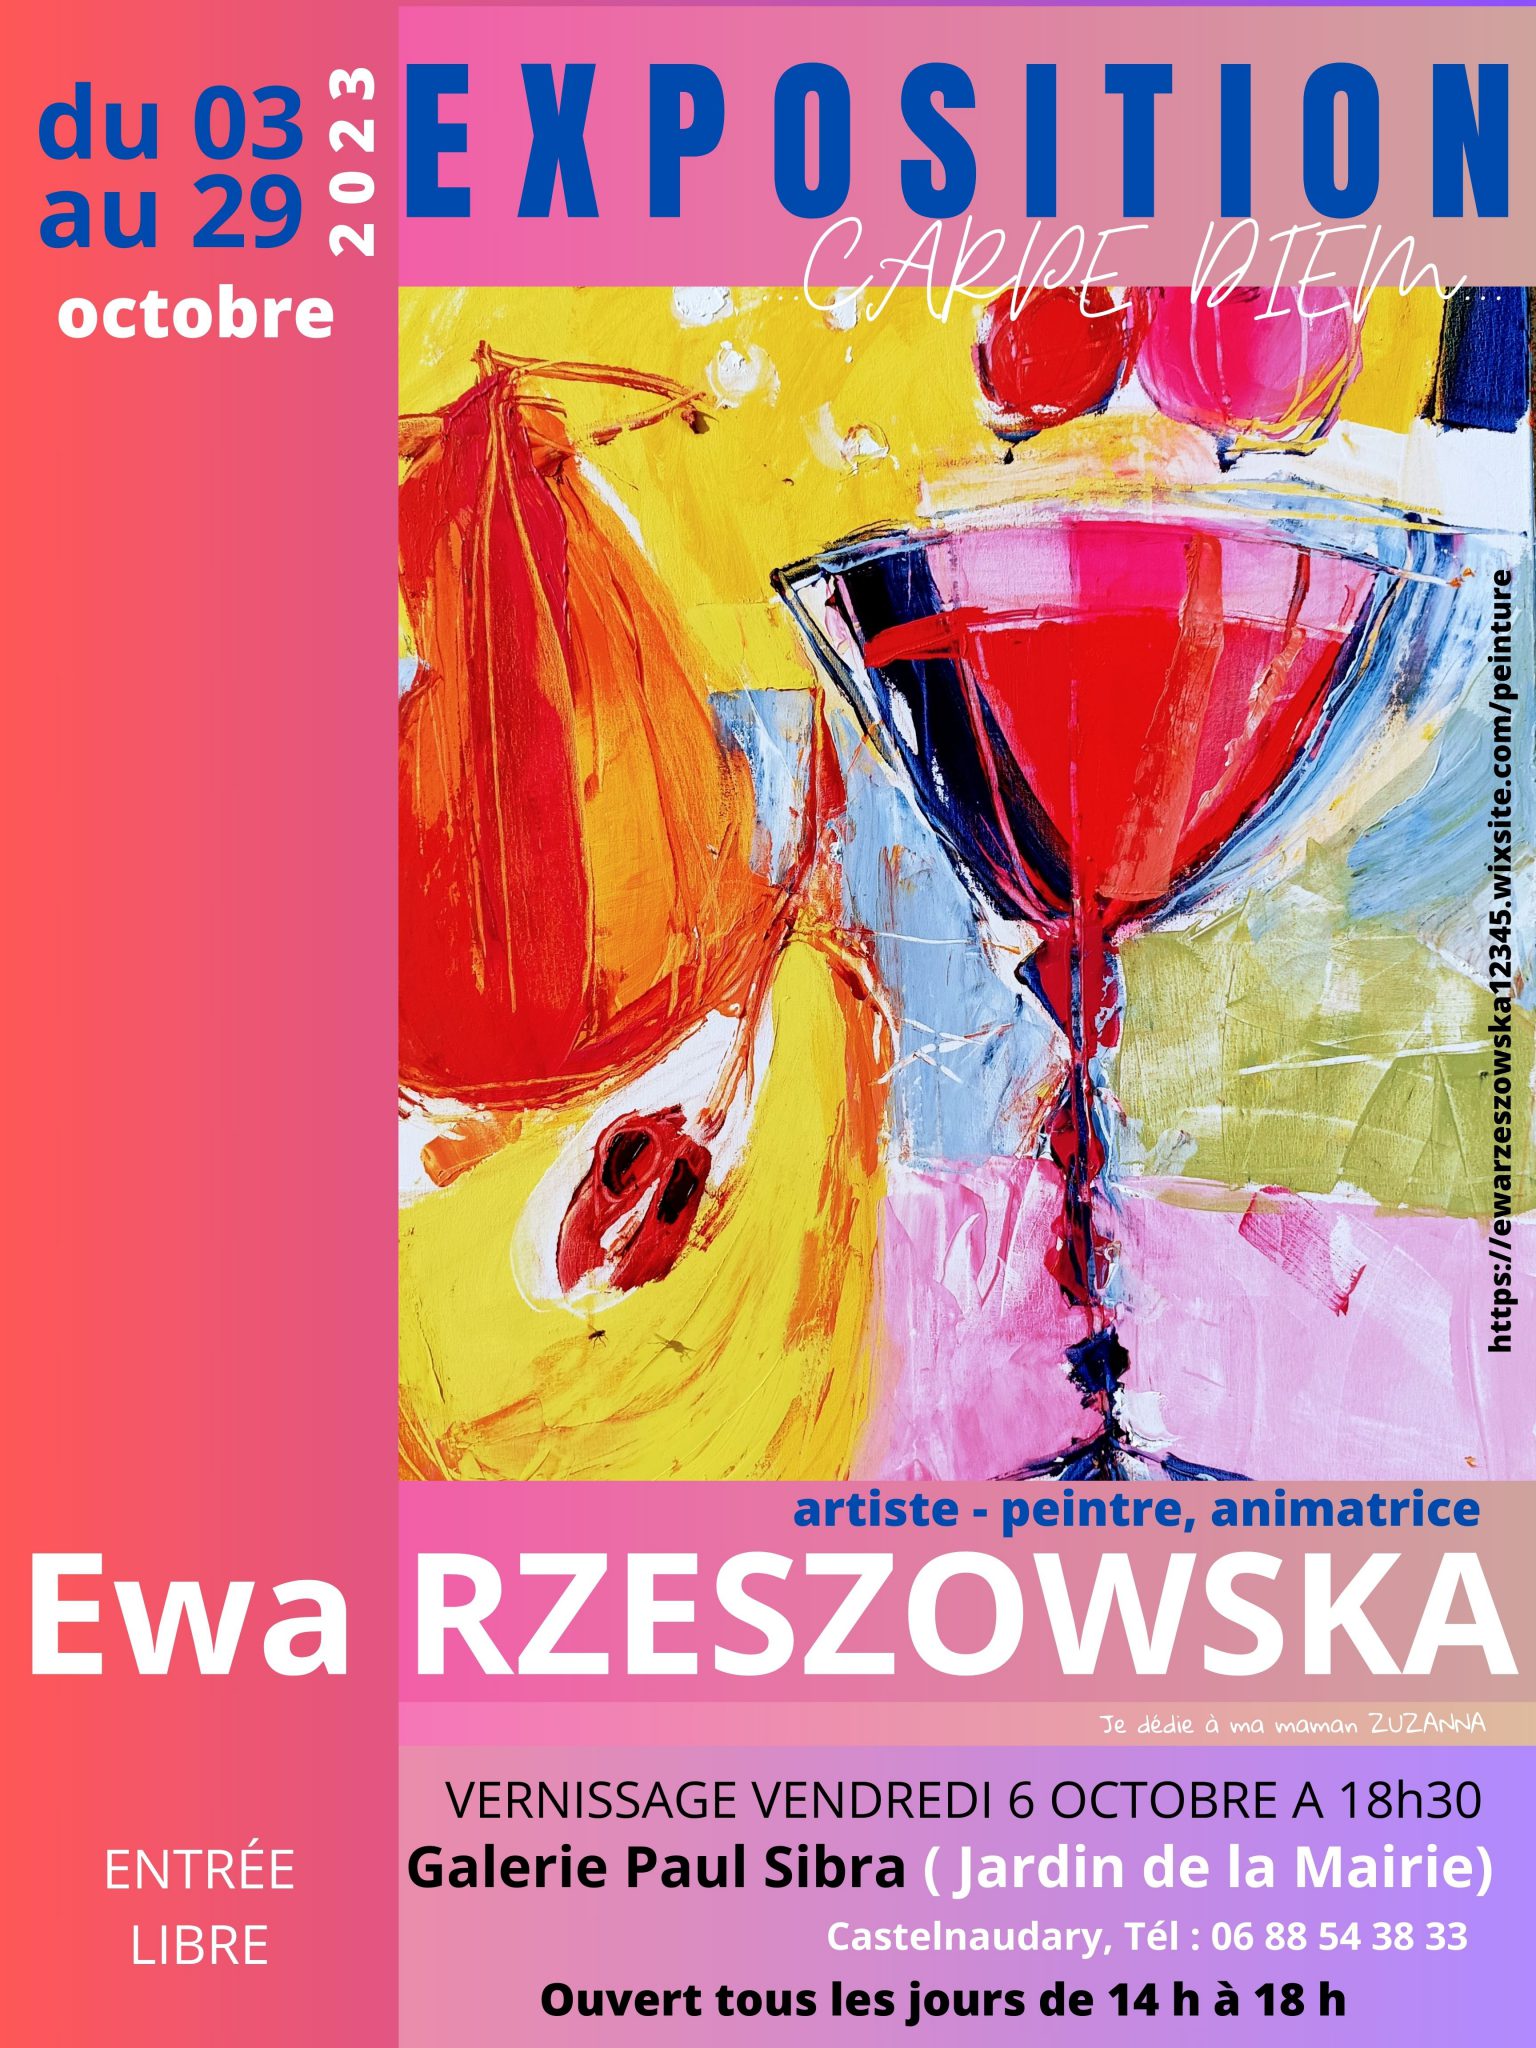 Exposition de Peinture "Carpe diem" d'Ewa Rzeszowska